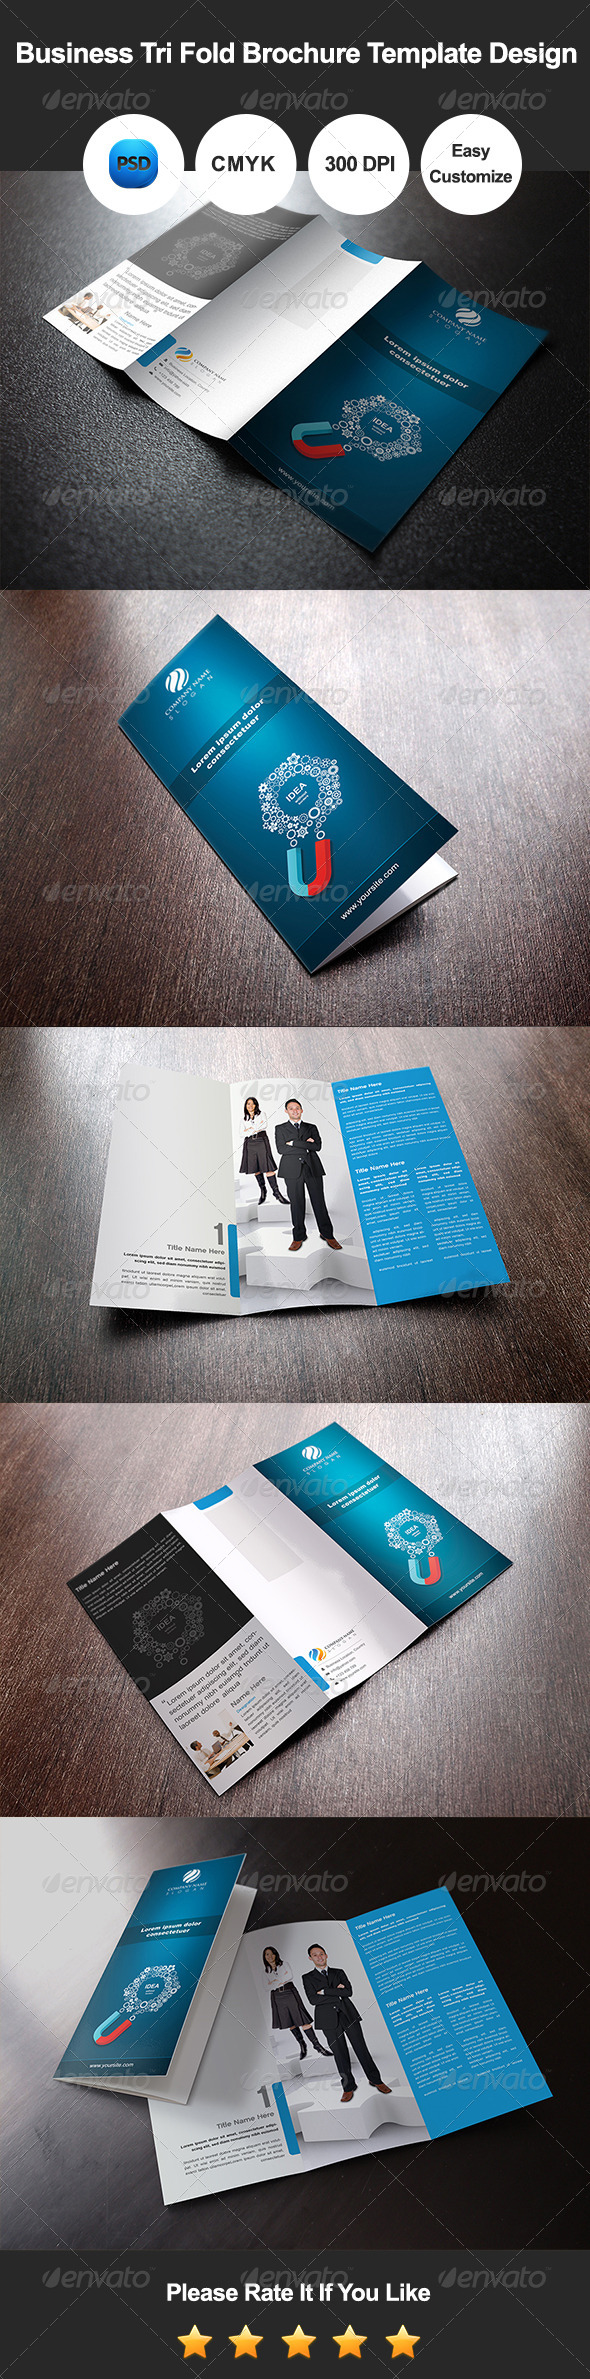 GraphicRiver Business Tri Fold Brochure Template Design 7679021